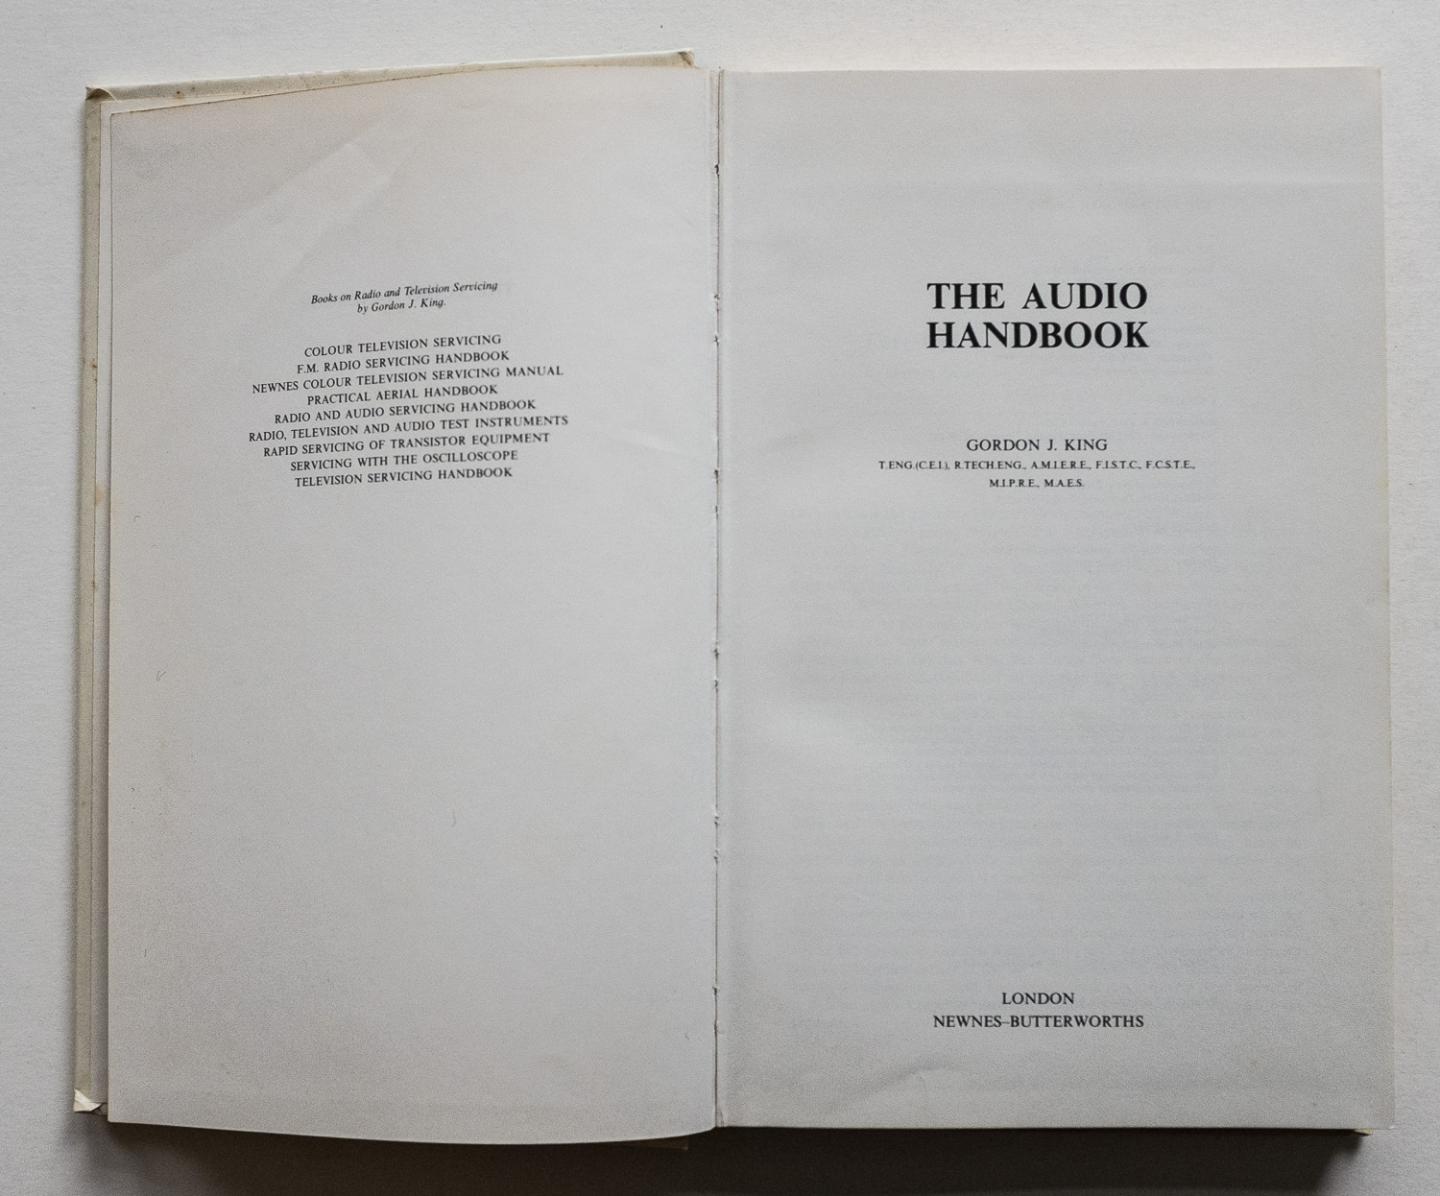 King, Gordon J. - The Audio Handbook